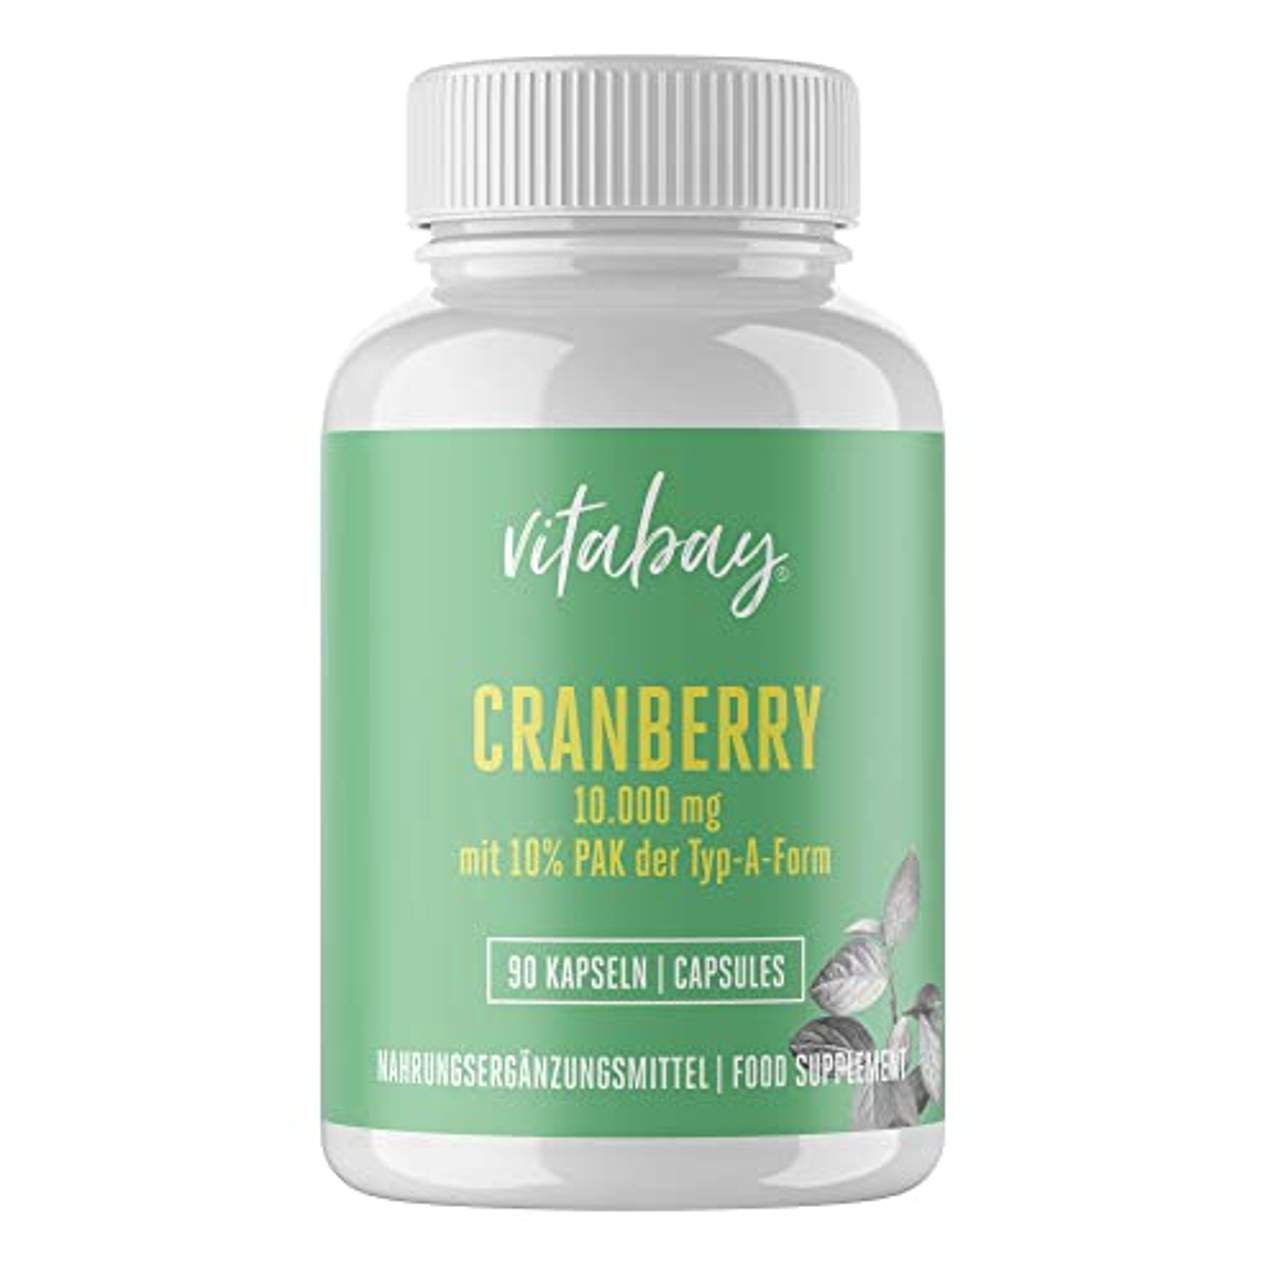 Vitabay Cranberry Extrakt 10.000 mg